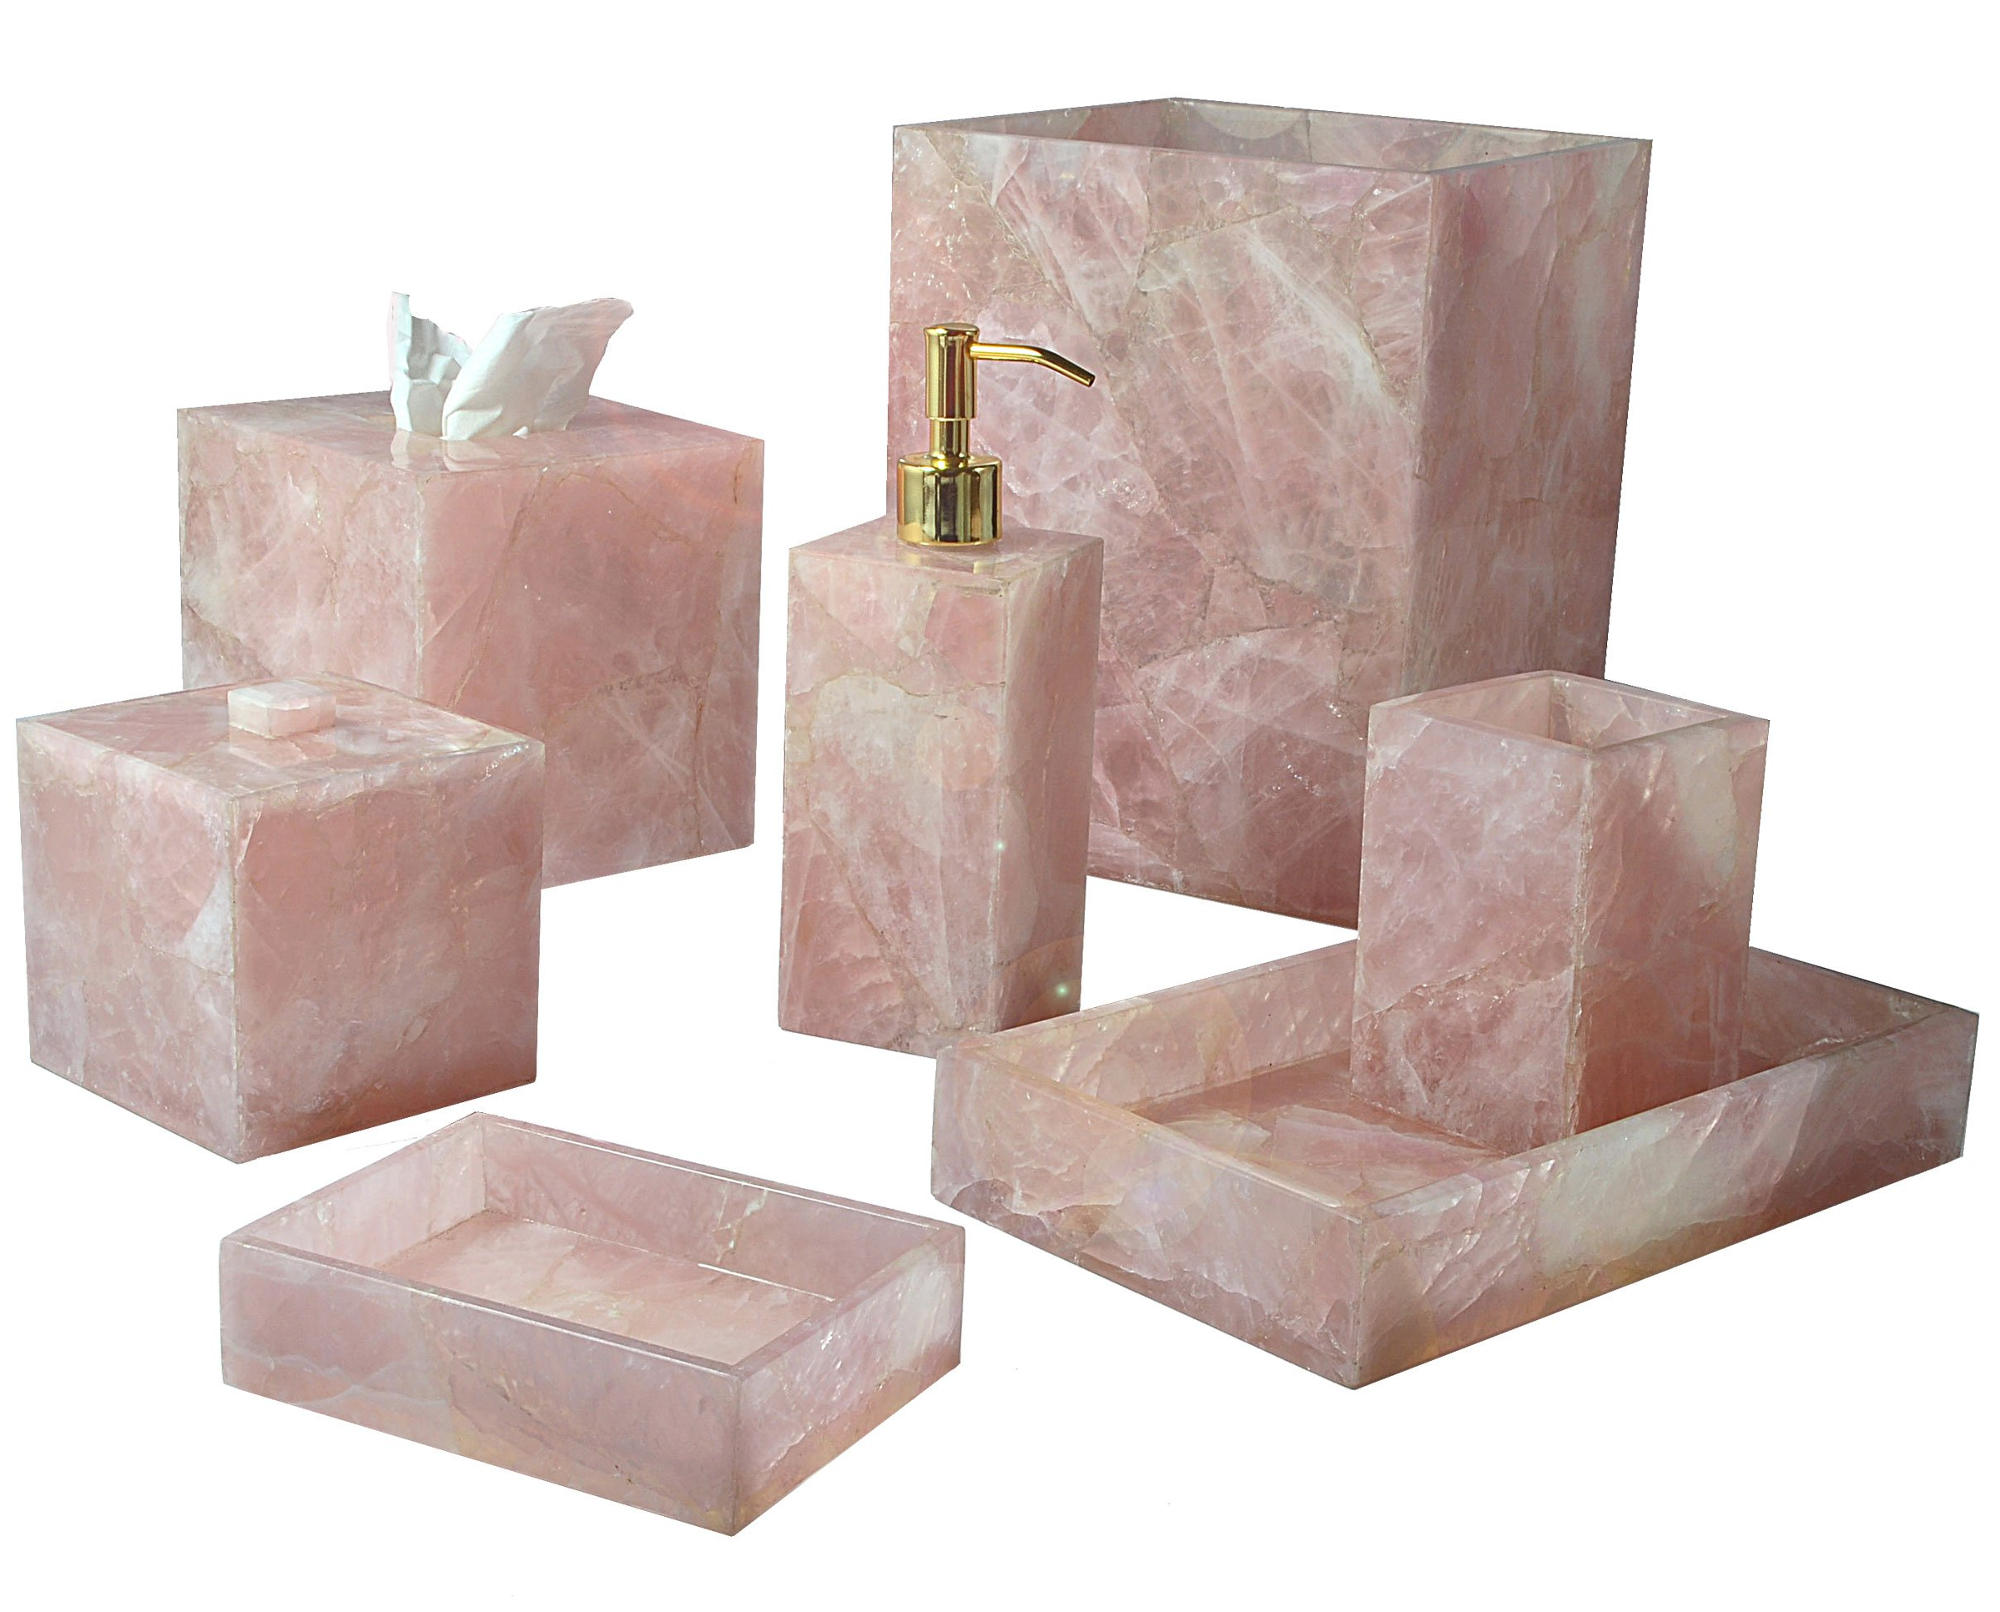 hot towel and rose quartz stone treatment